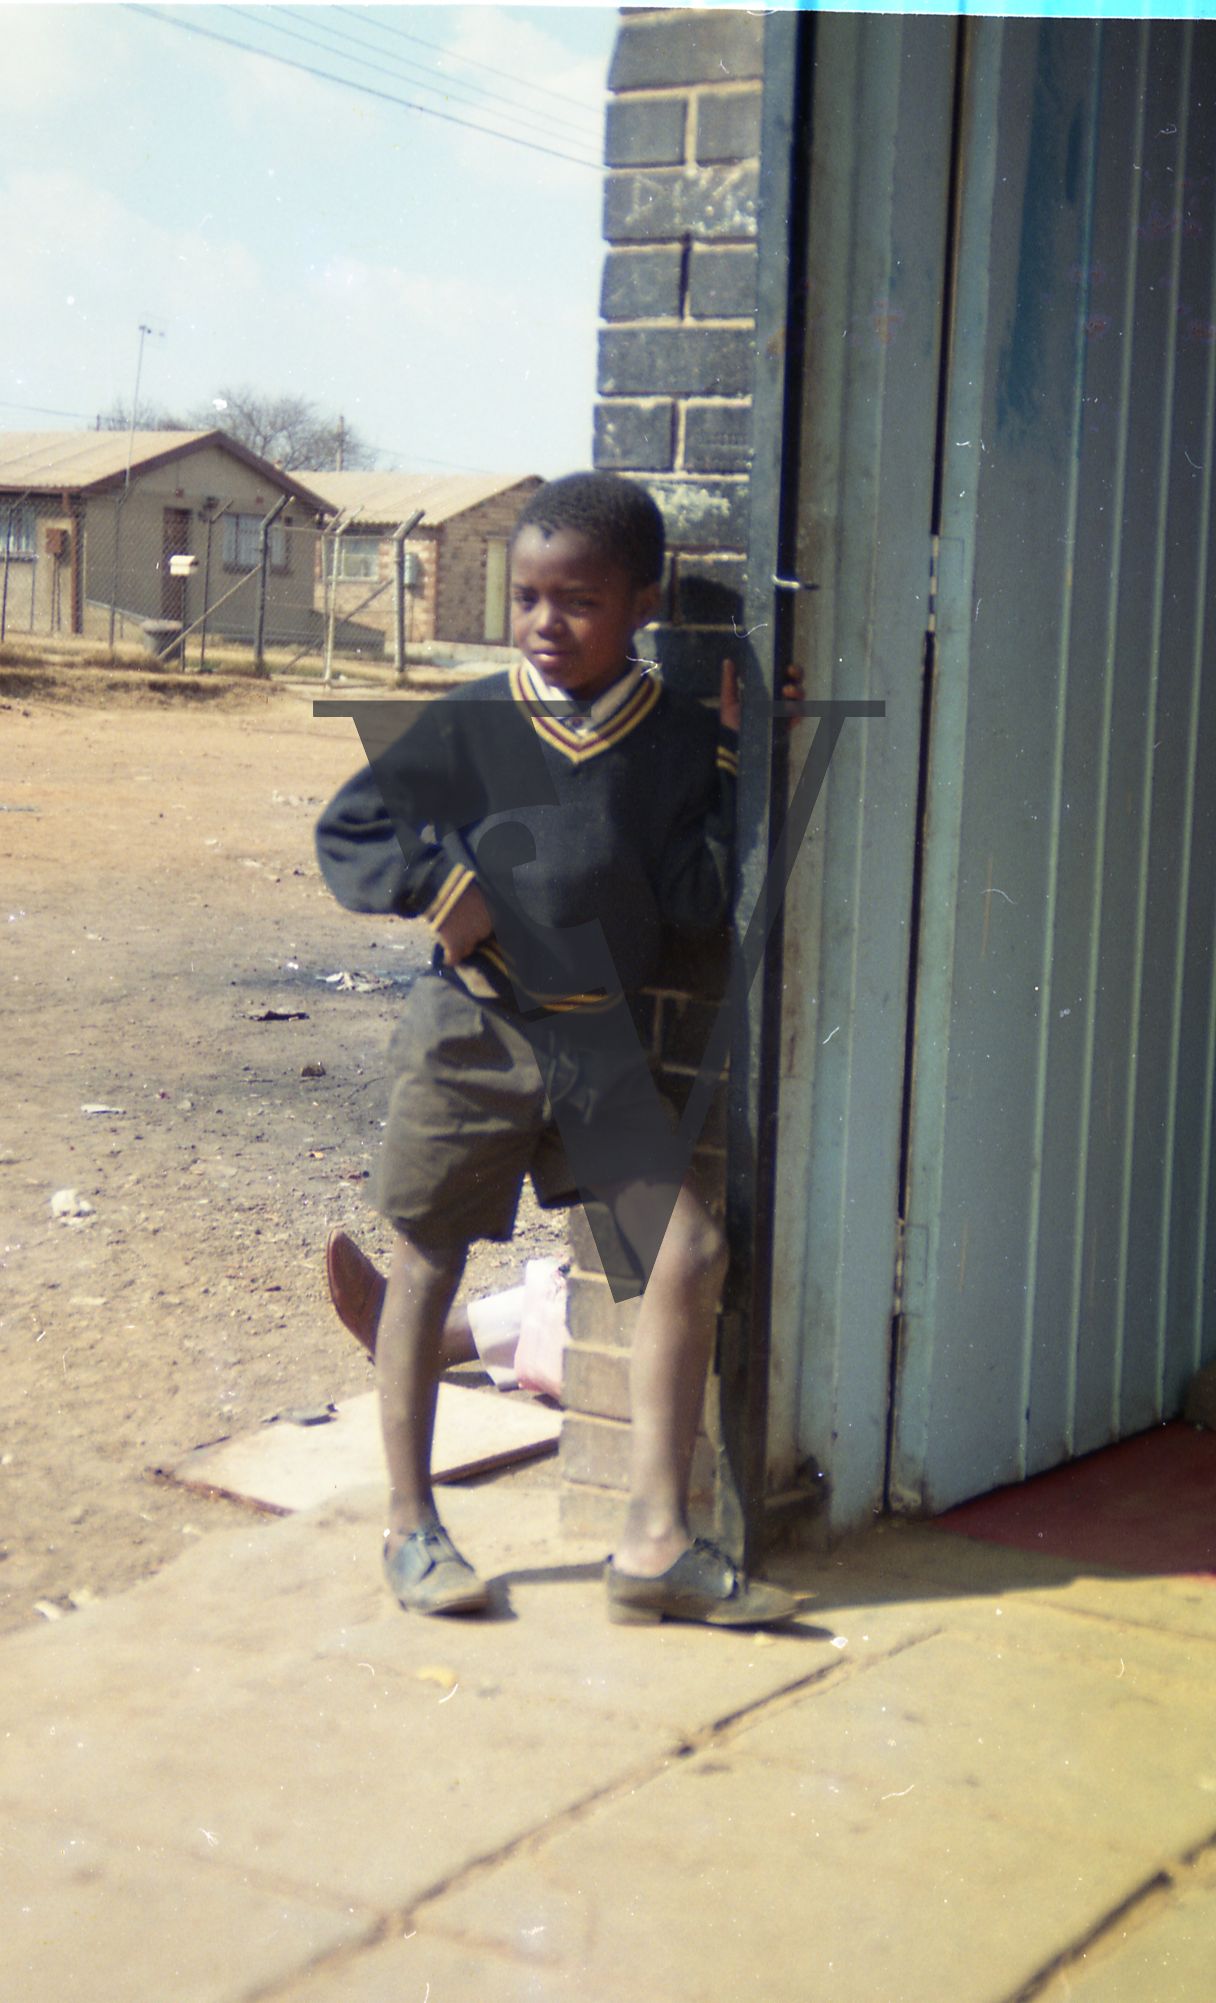 South Africa, boy, school uniform, portrait, mid-shot.